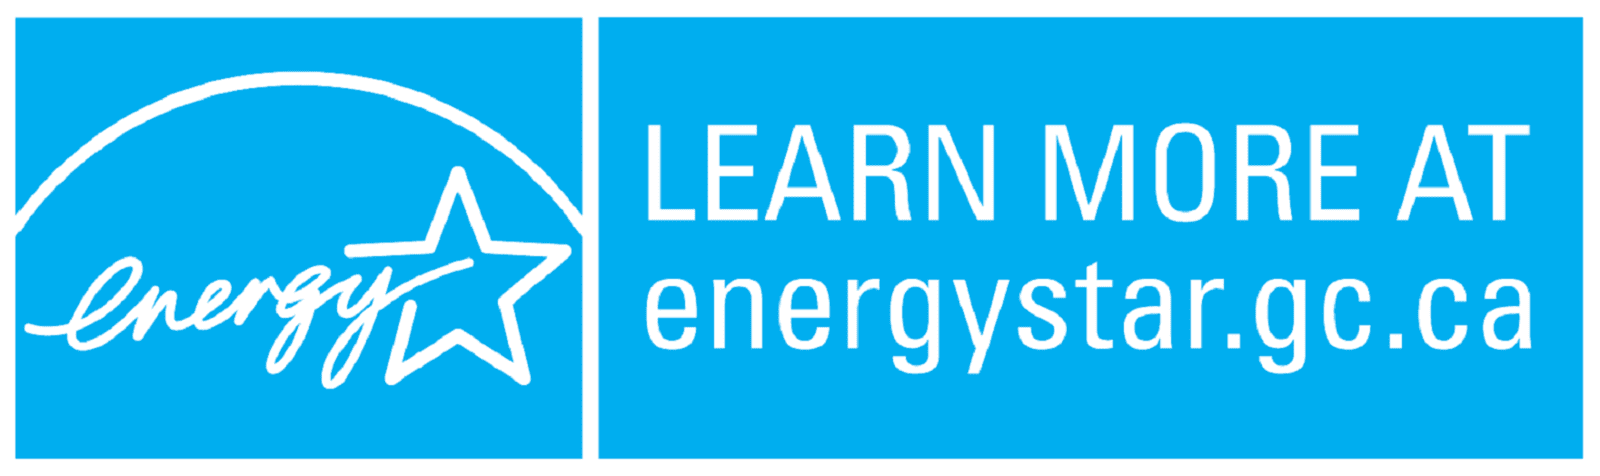 Learn more at energystar.gc.ca